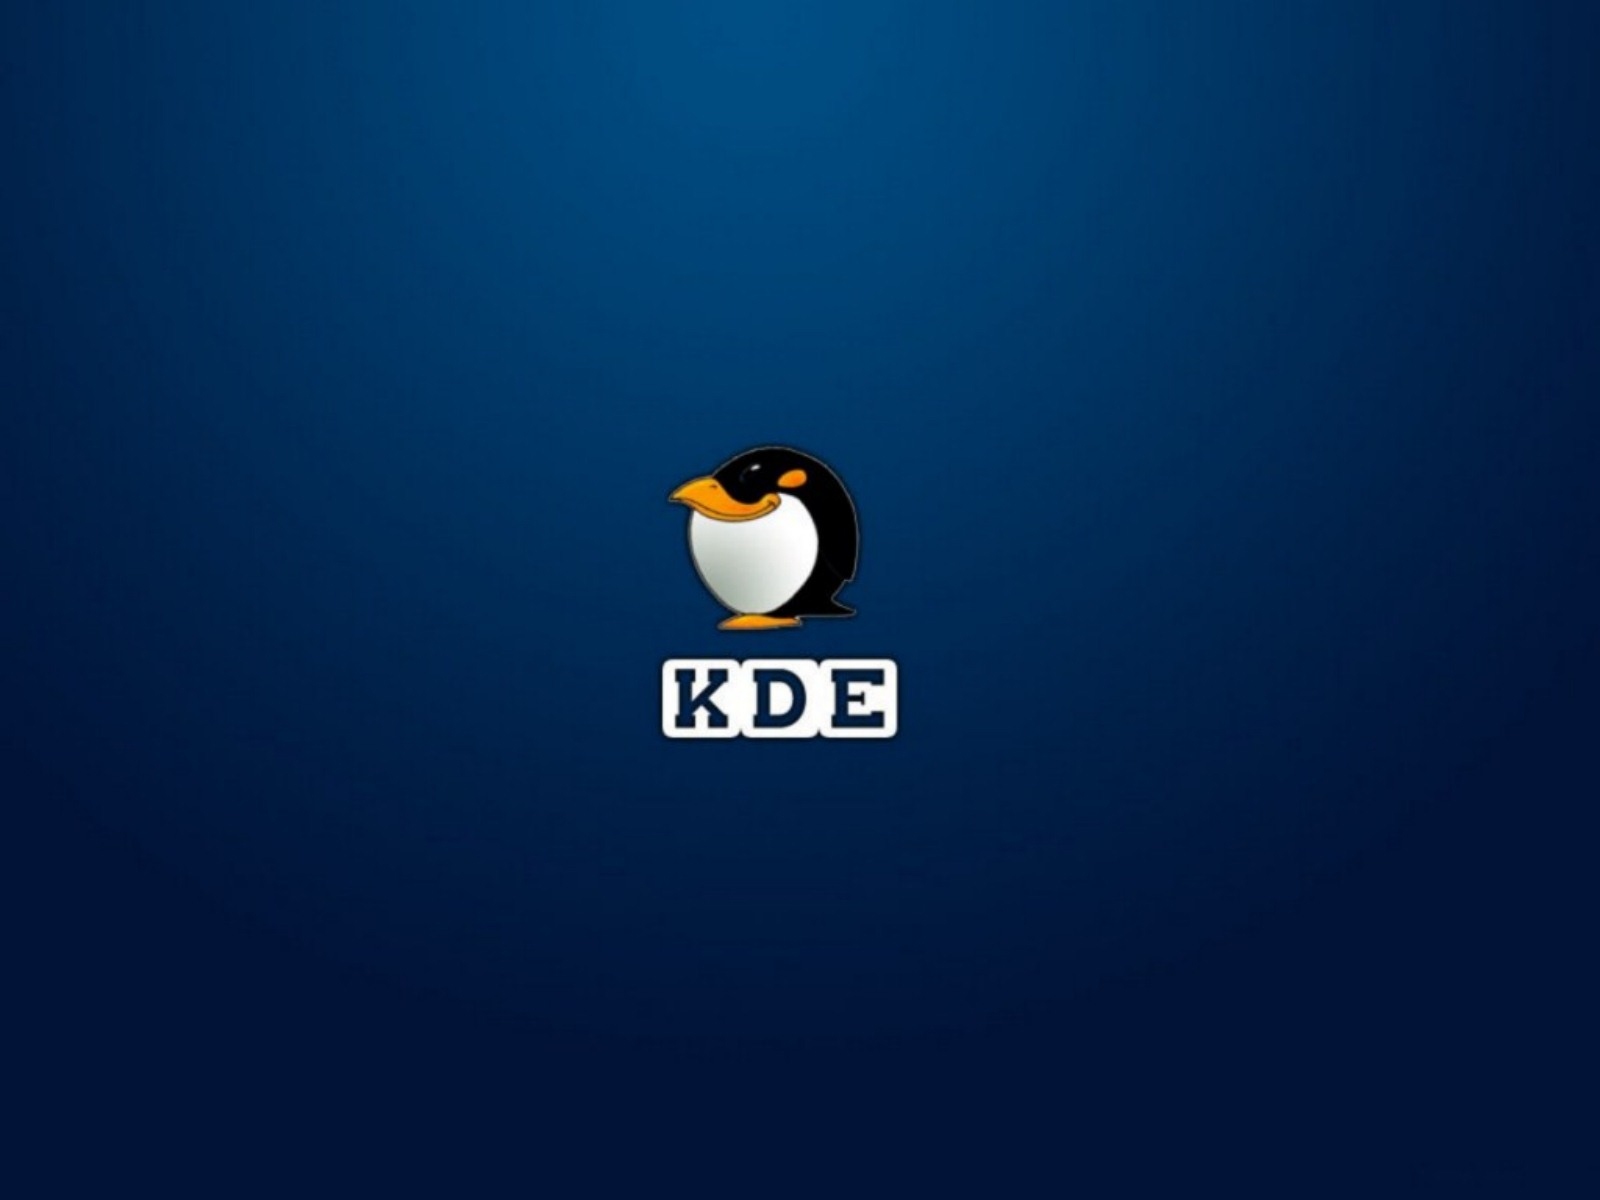 Tux The Pinguin And K Desktop Environment Wallpaper Kde Background